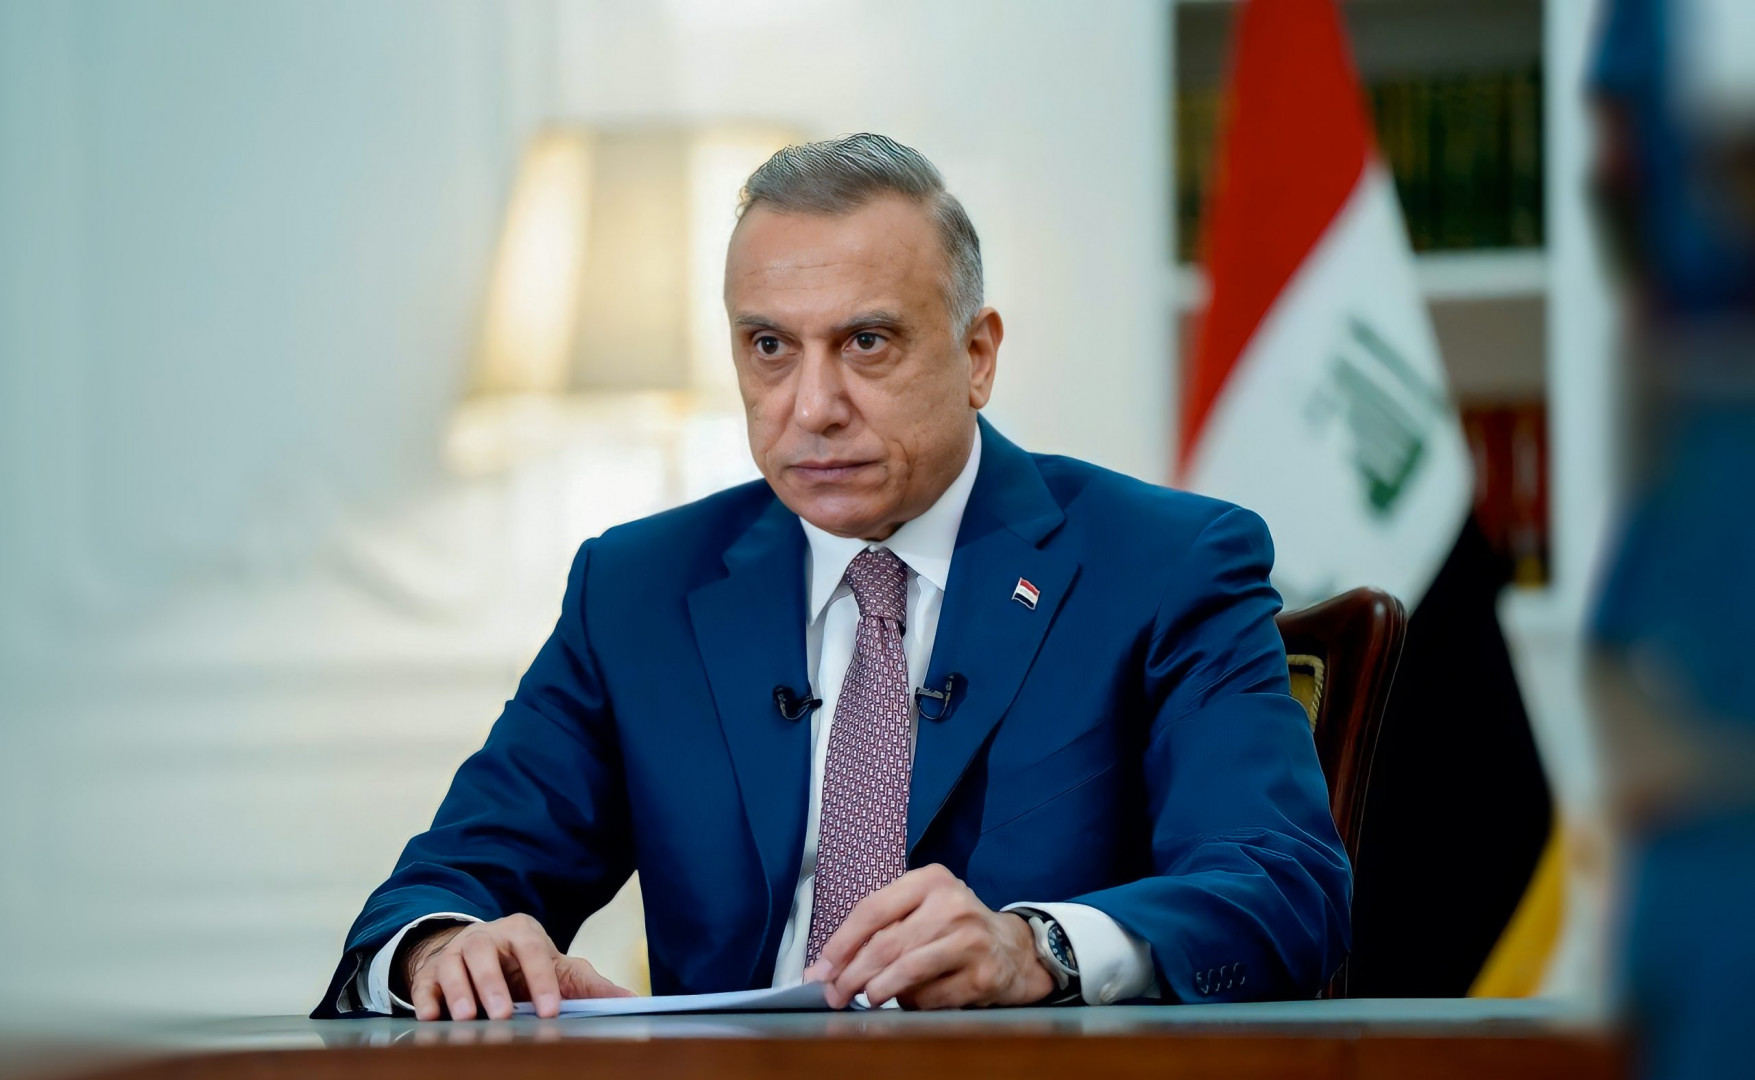 Iraqi Prime Minister Visits Washington In Hopes Of U.S. Troop Withdrawal